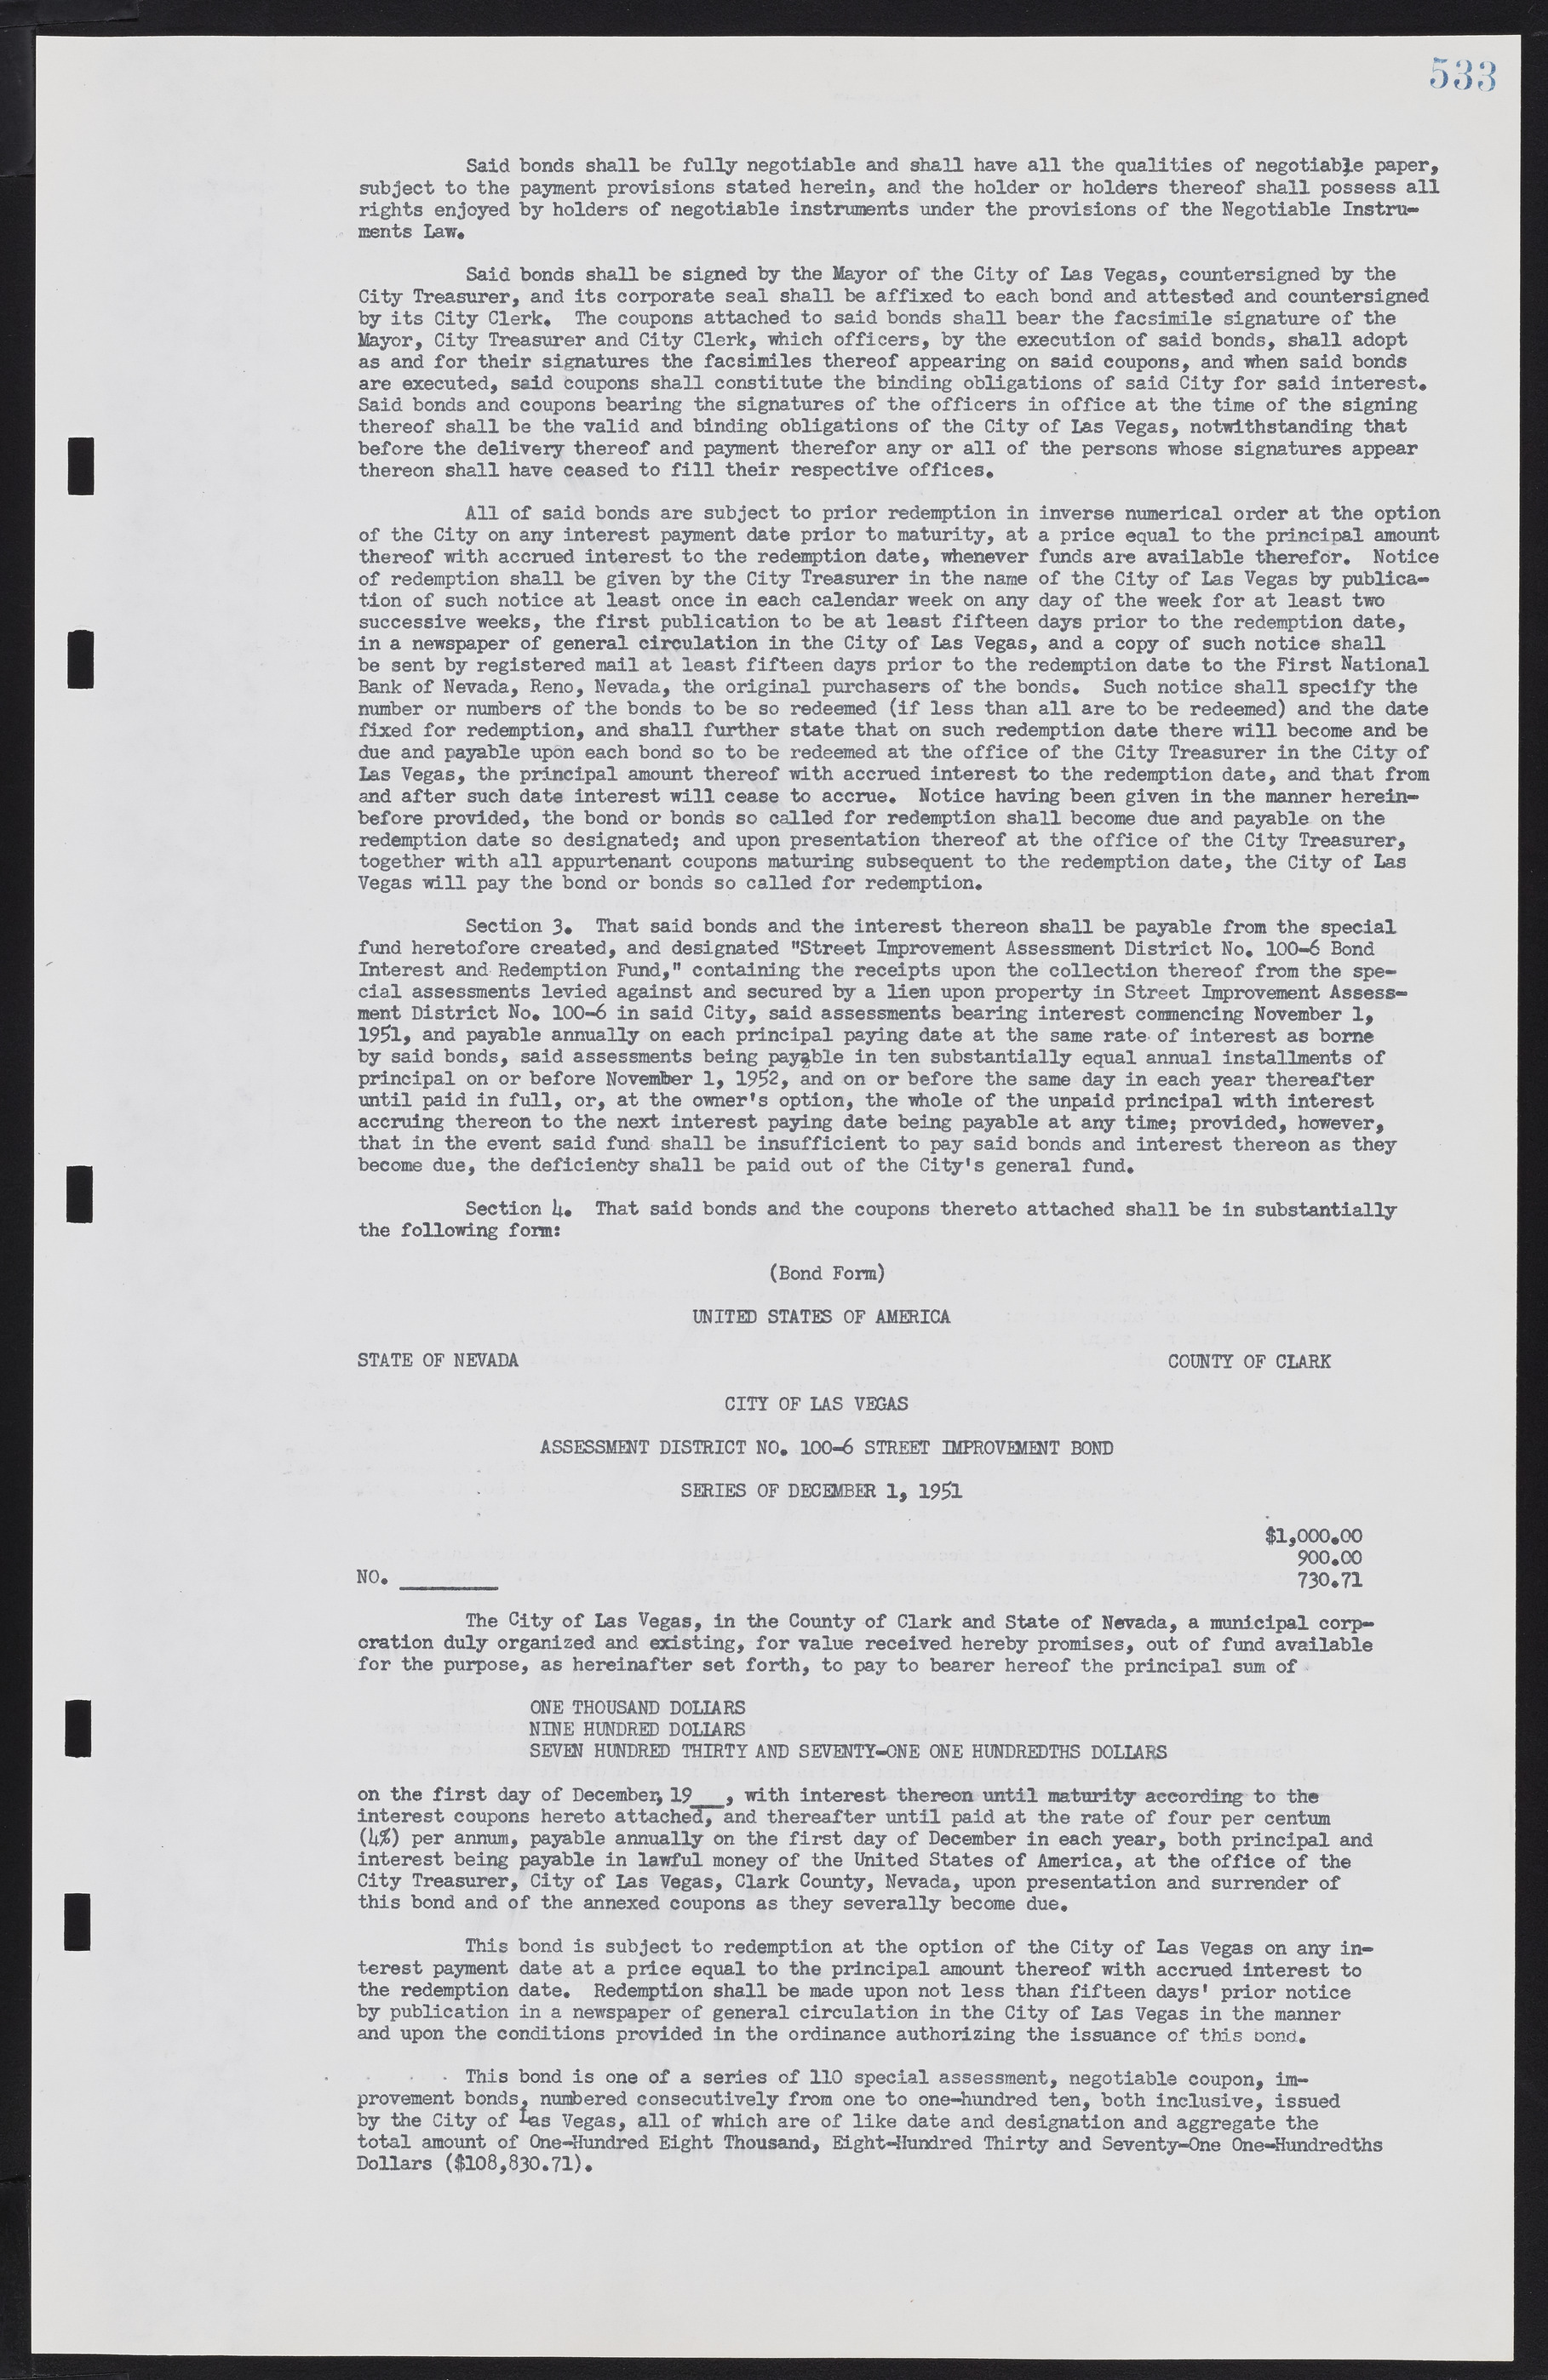 Las Vegas City Commission Minutes, November 7, 1949 to May 21, 1952, lvc000007-551